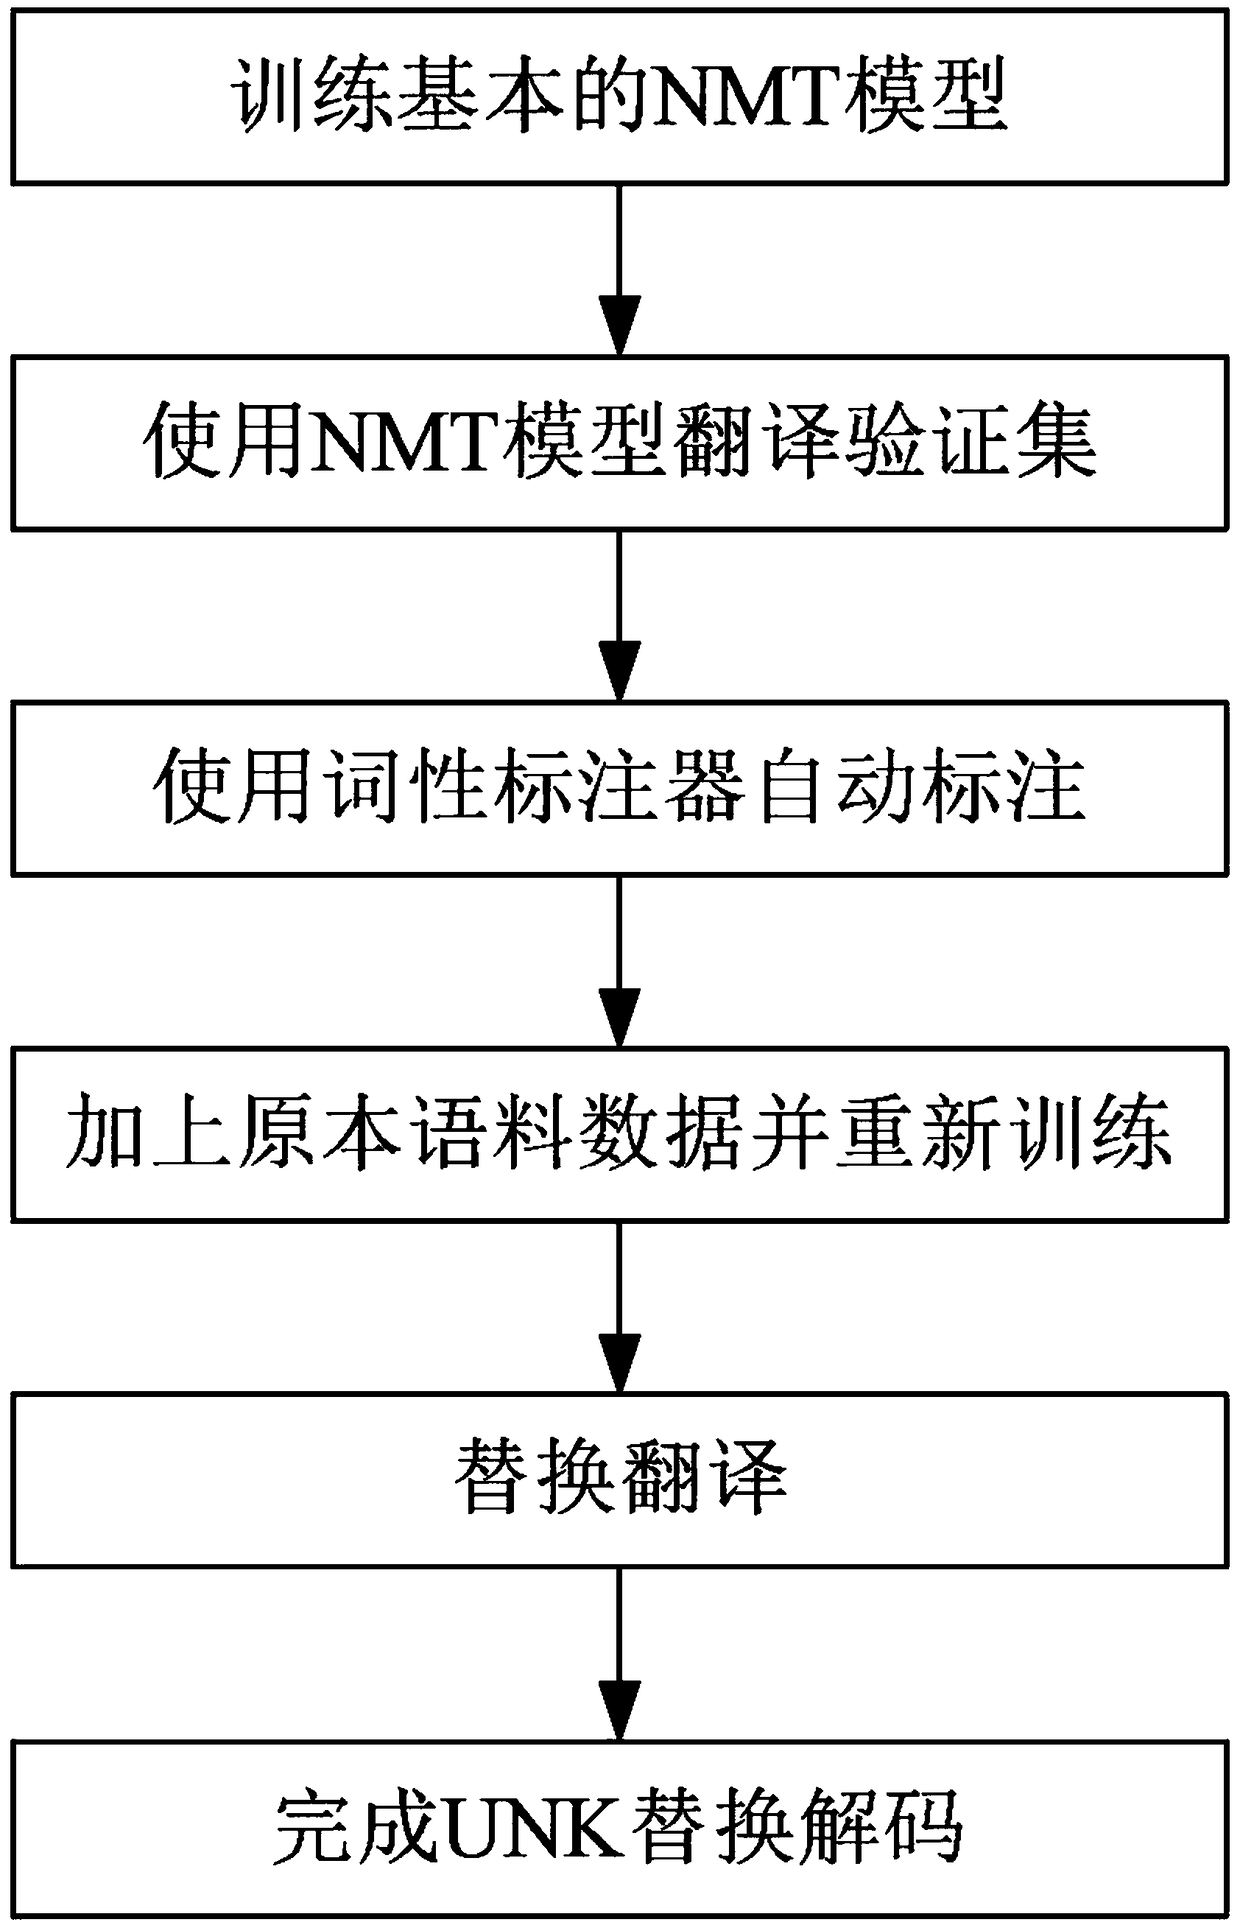 Definitive neural network machine translation method and storage medium